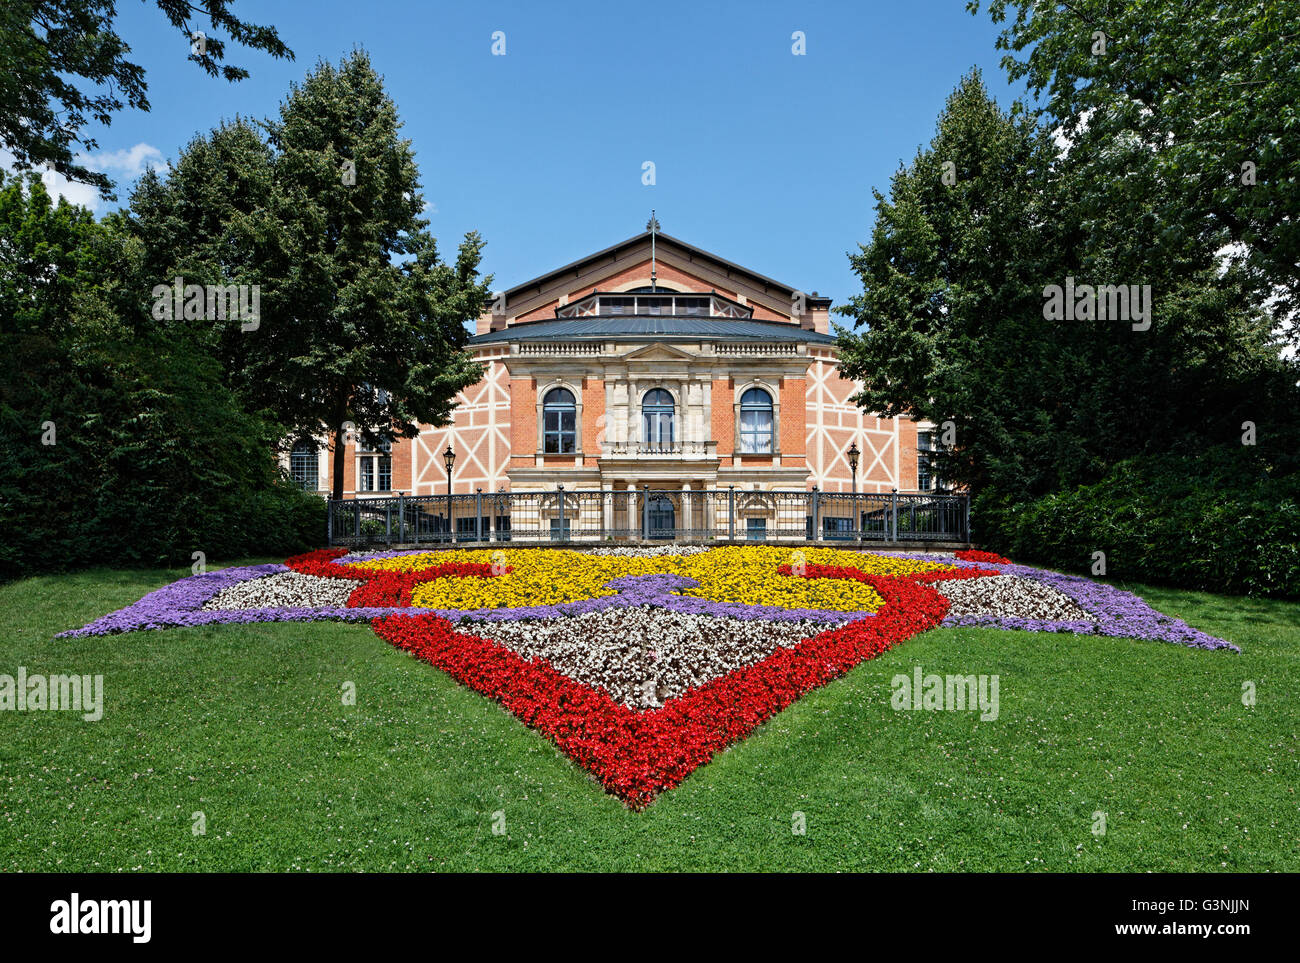 Bayreuther Festspielhaus, Richard-Wagner-Festspiele, Bayreuther Festspiele, grüne Hügel mit Blumenbeeten, Bayreuth, Oberfranken Stockfoto